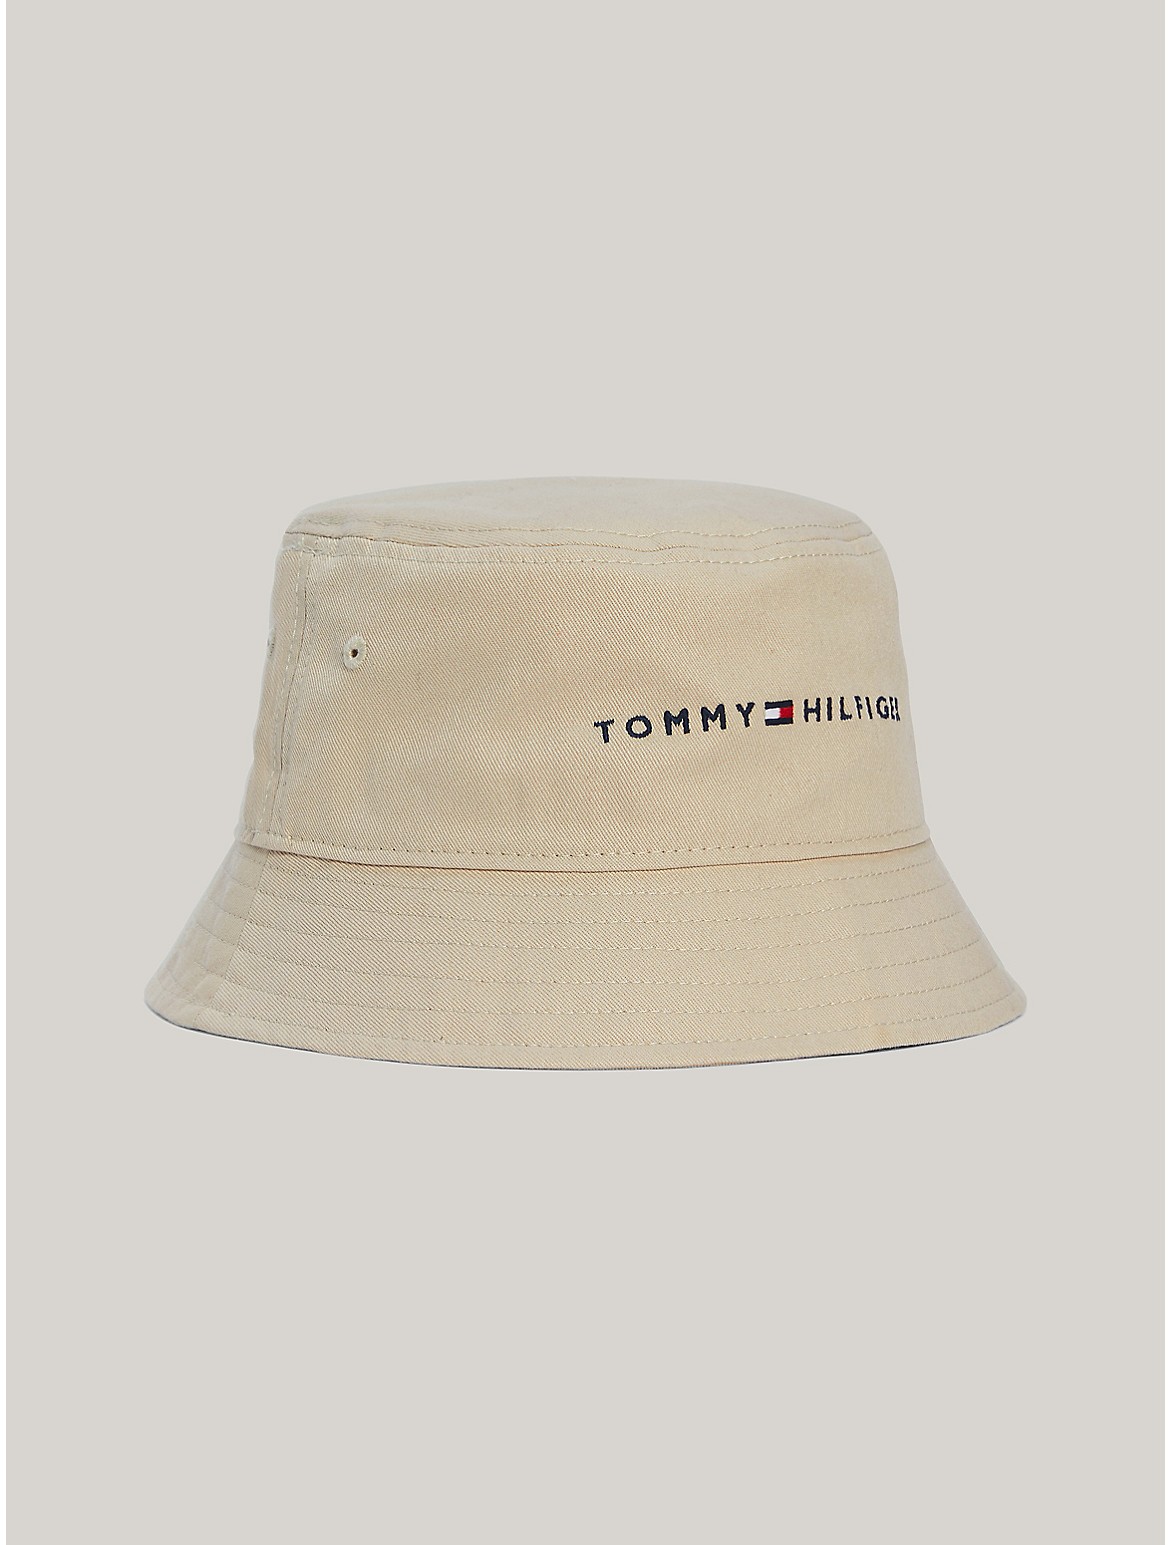 Tommy Hilfiger Men's Tommy Logo Bucket Hat